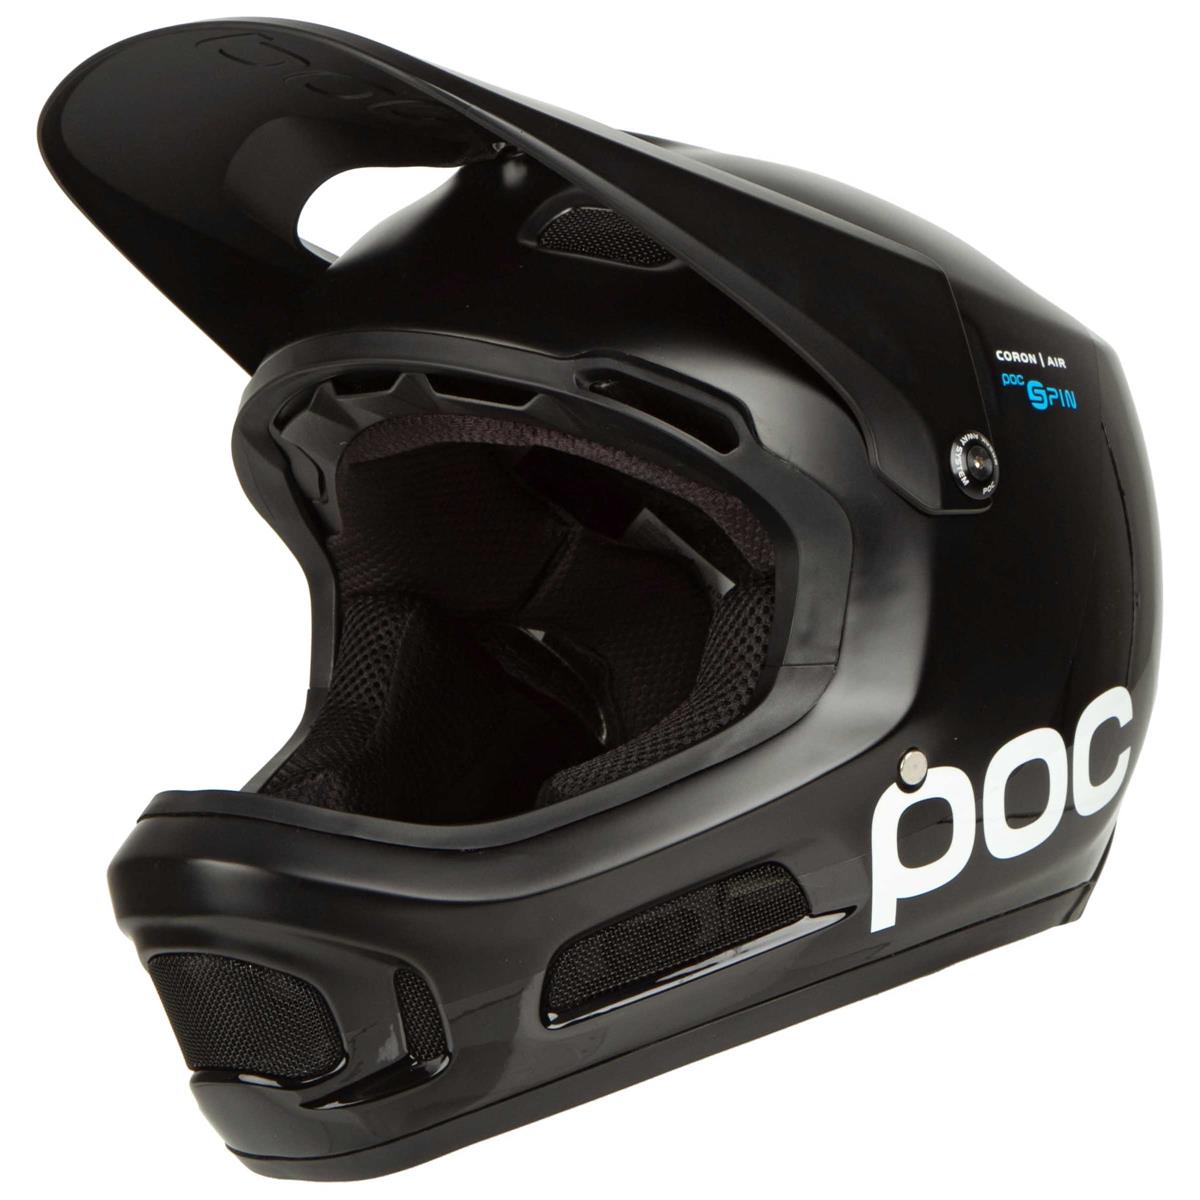 Helmet for Downhill Mountain Biking POC Coron Air Spin